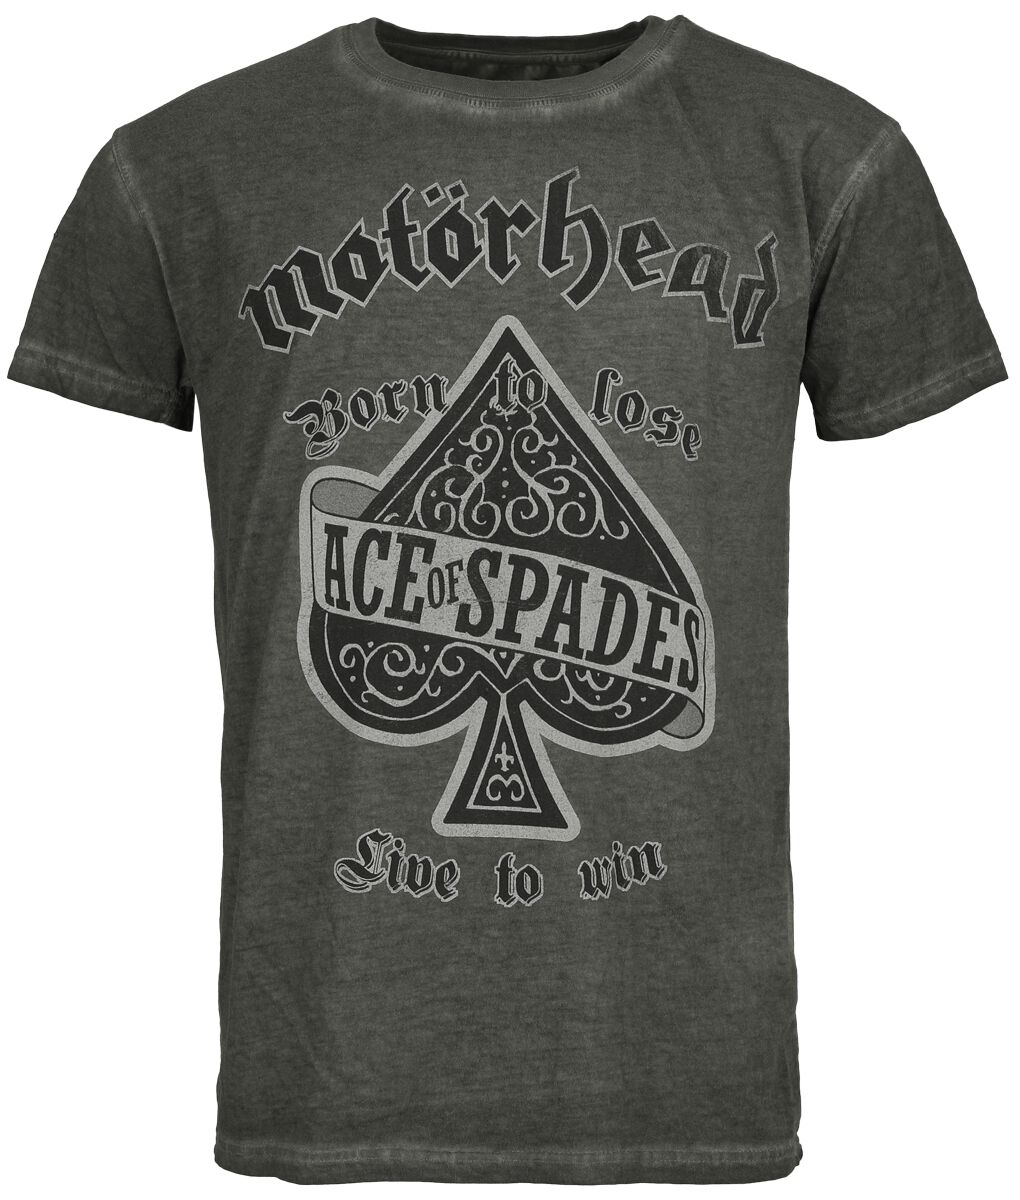 Motörhead Ace Of Spades T-Shirt anthrazit in L